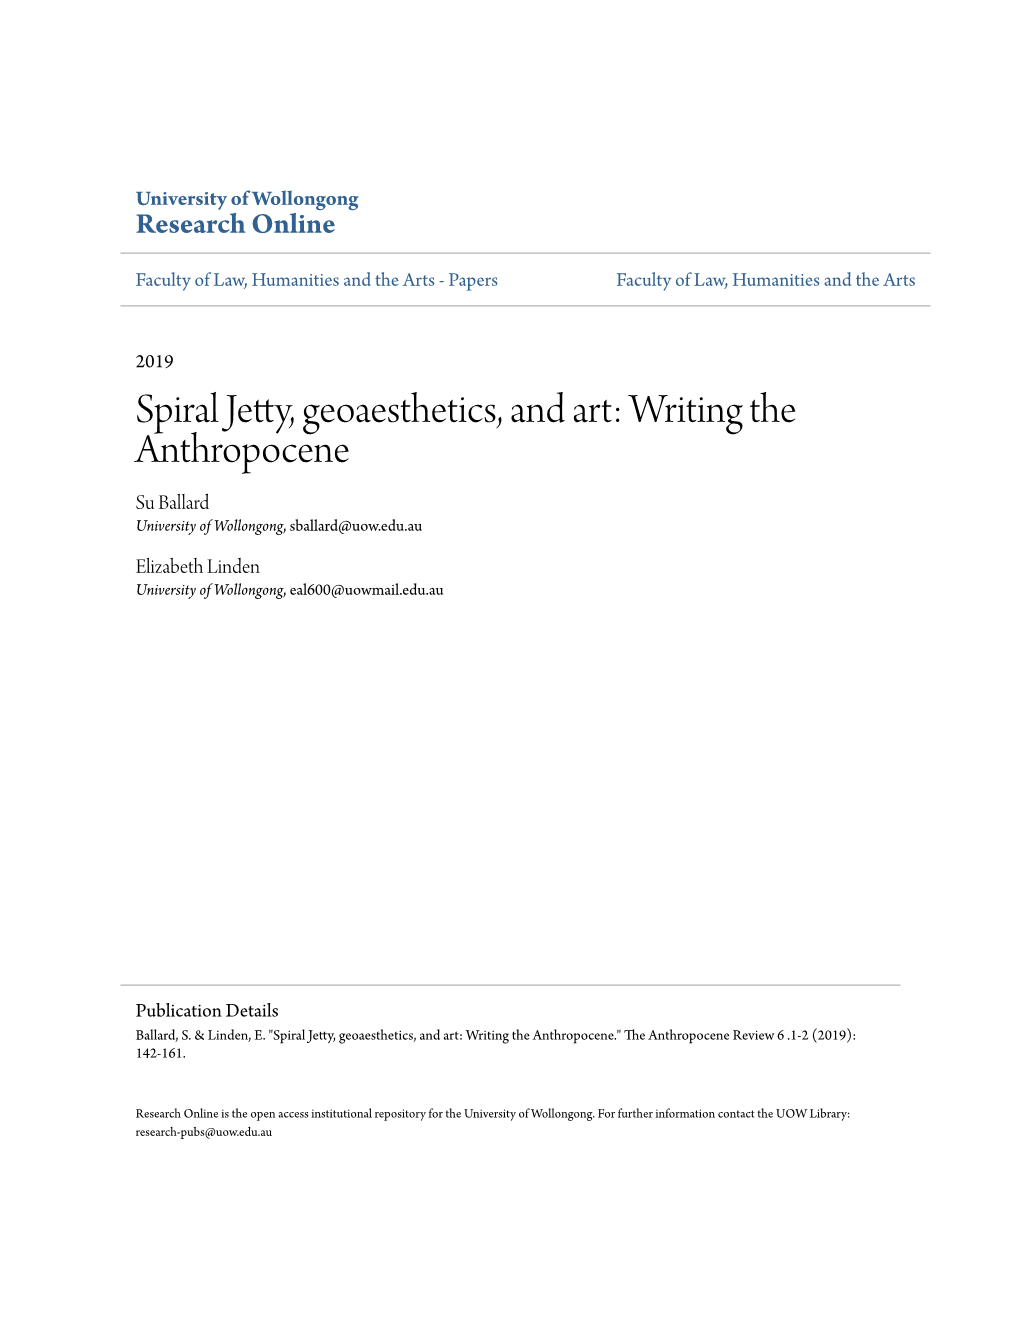 Spiral Jetty, Geoaesthetics, and Art: Writing the Anthropocene Su Ballard University of Wollongong, Sballard@Uow.Edu.Au